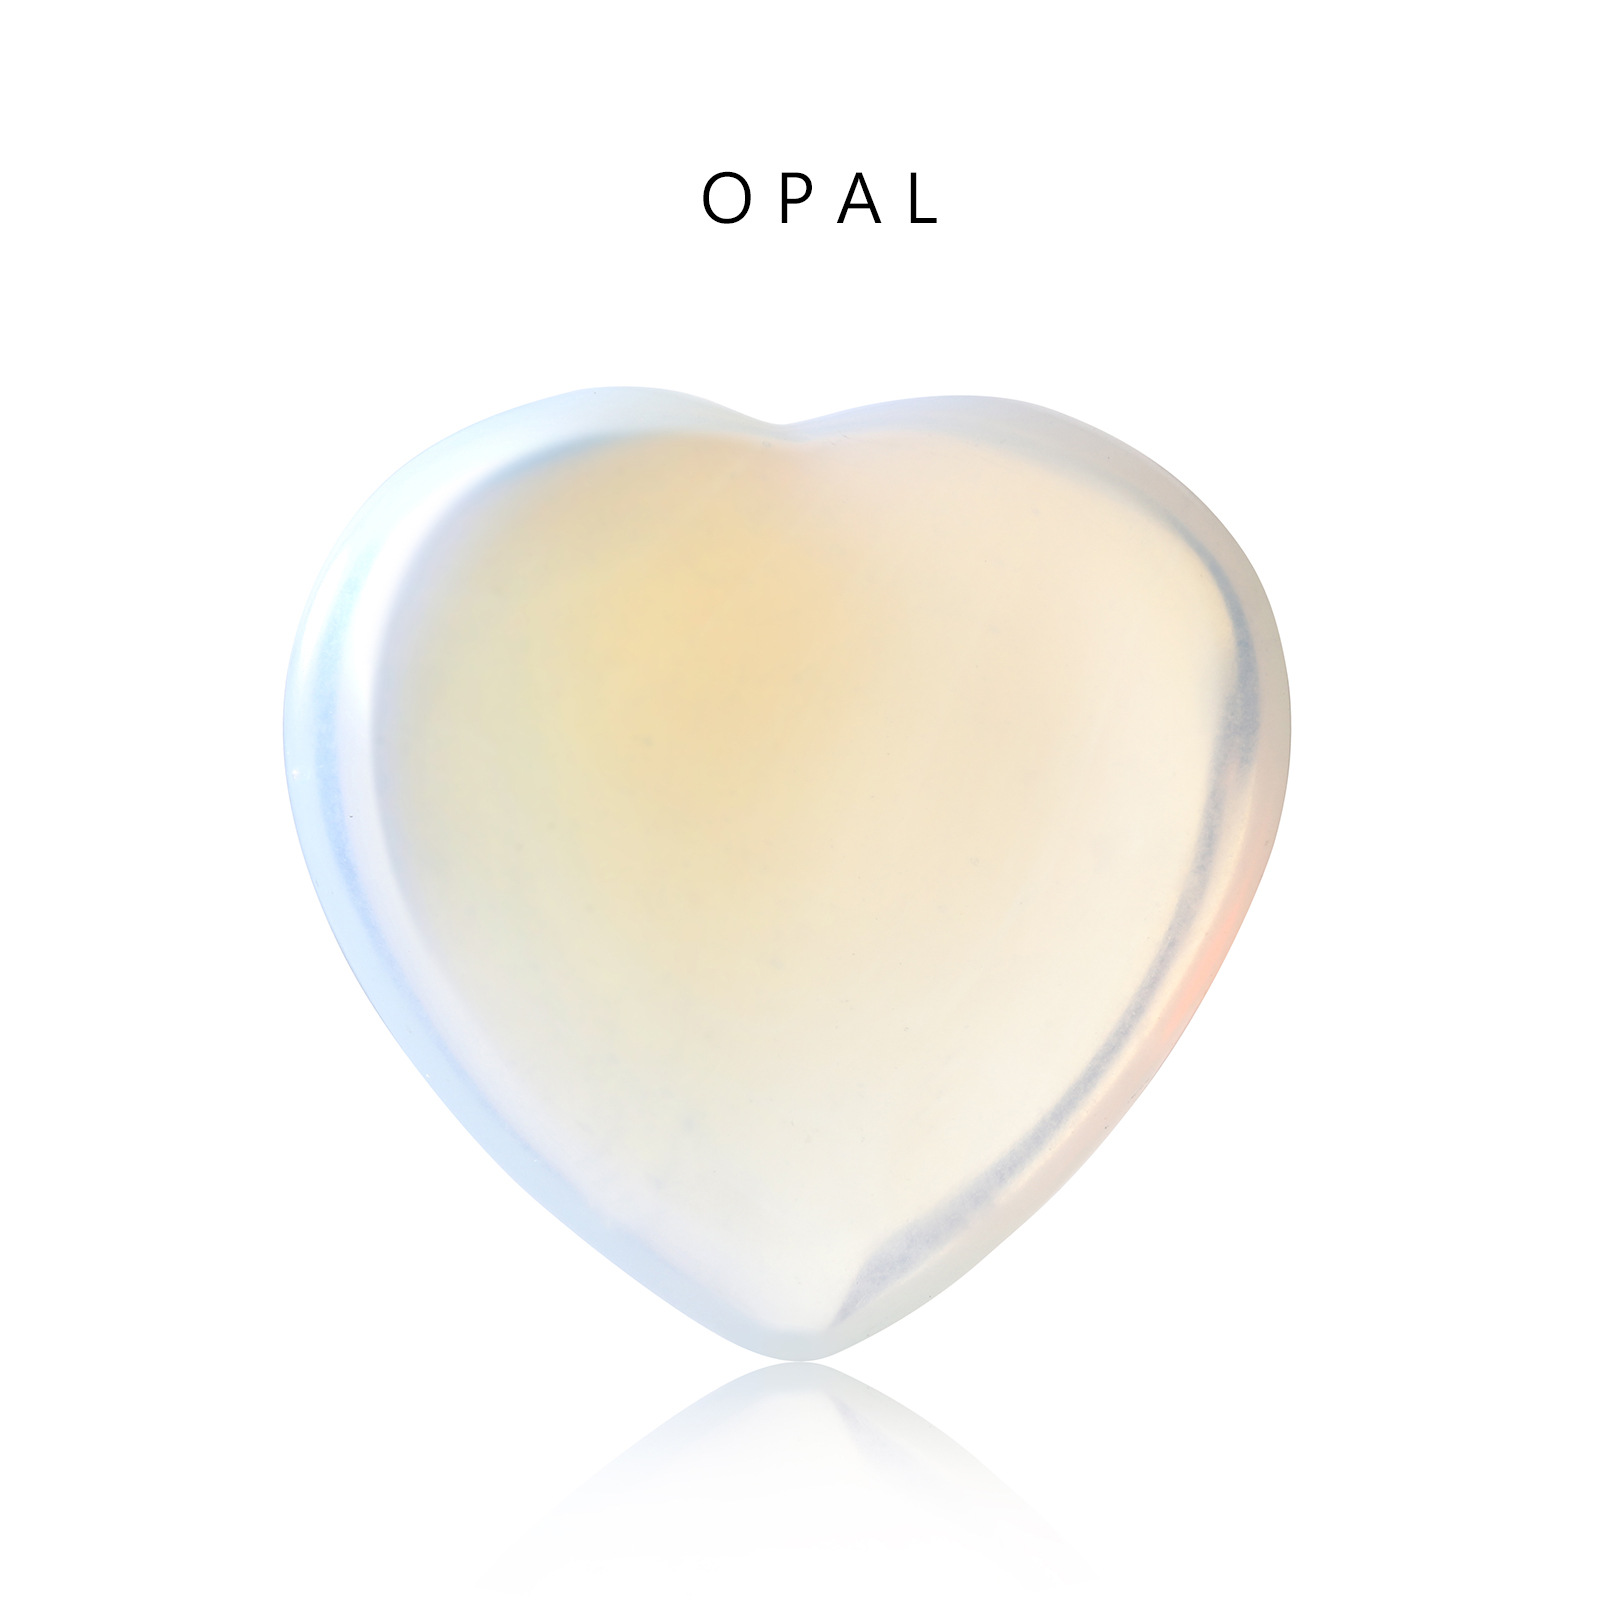 21:opal mar